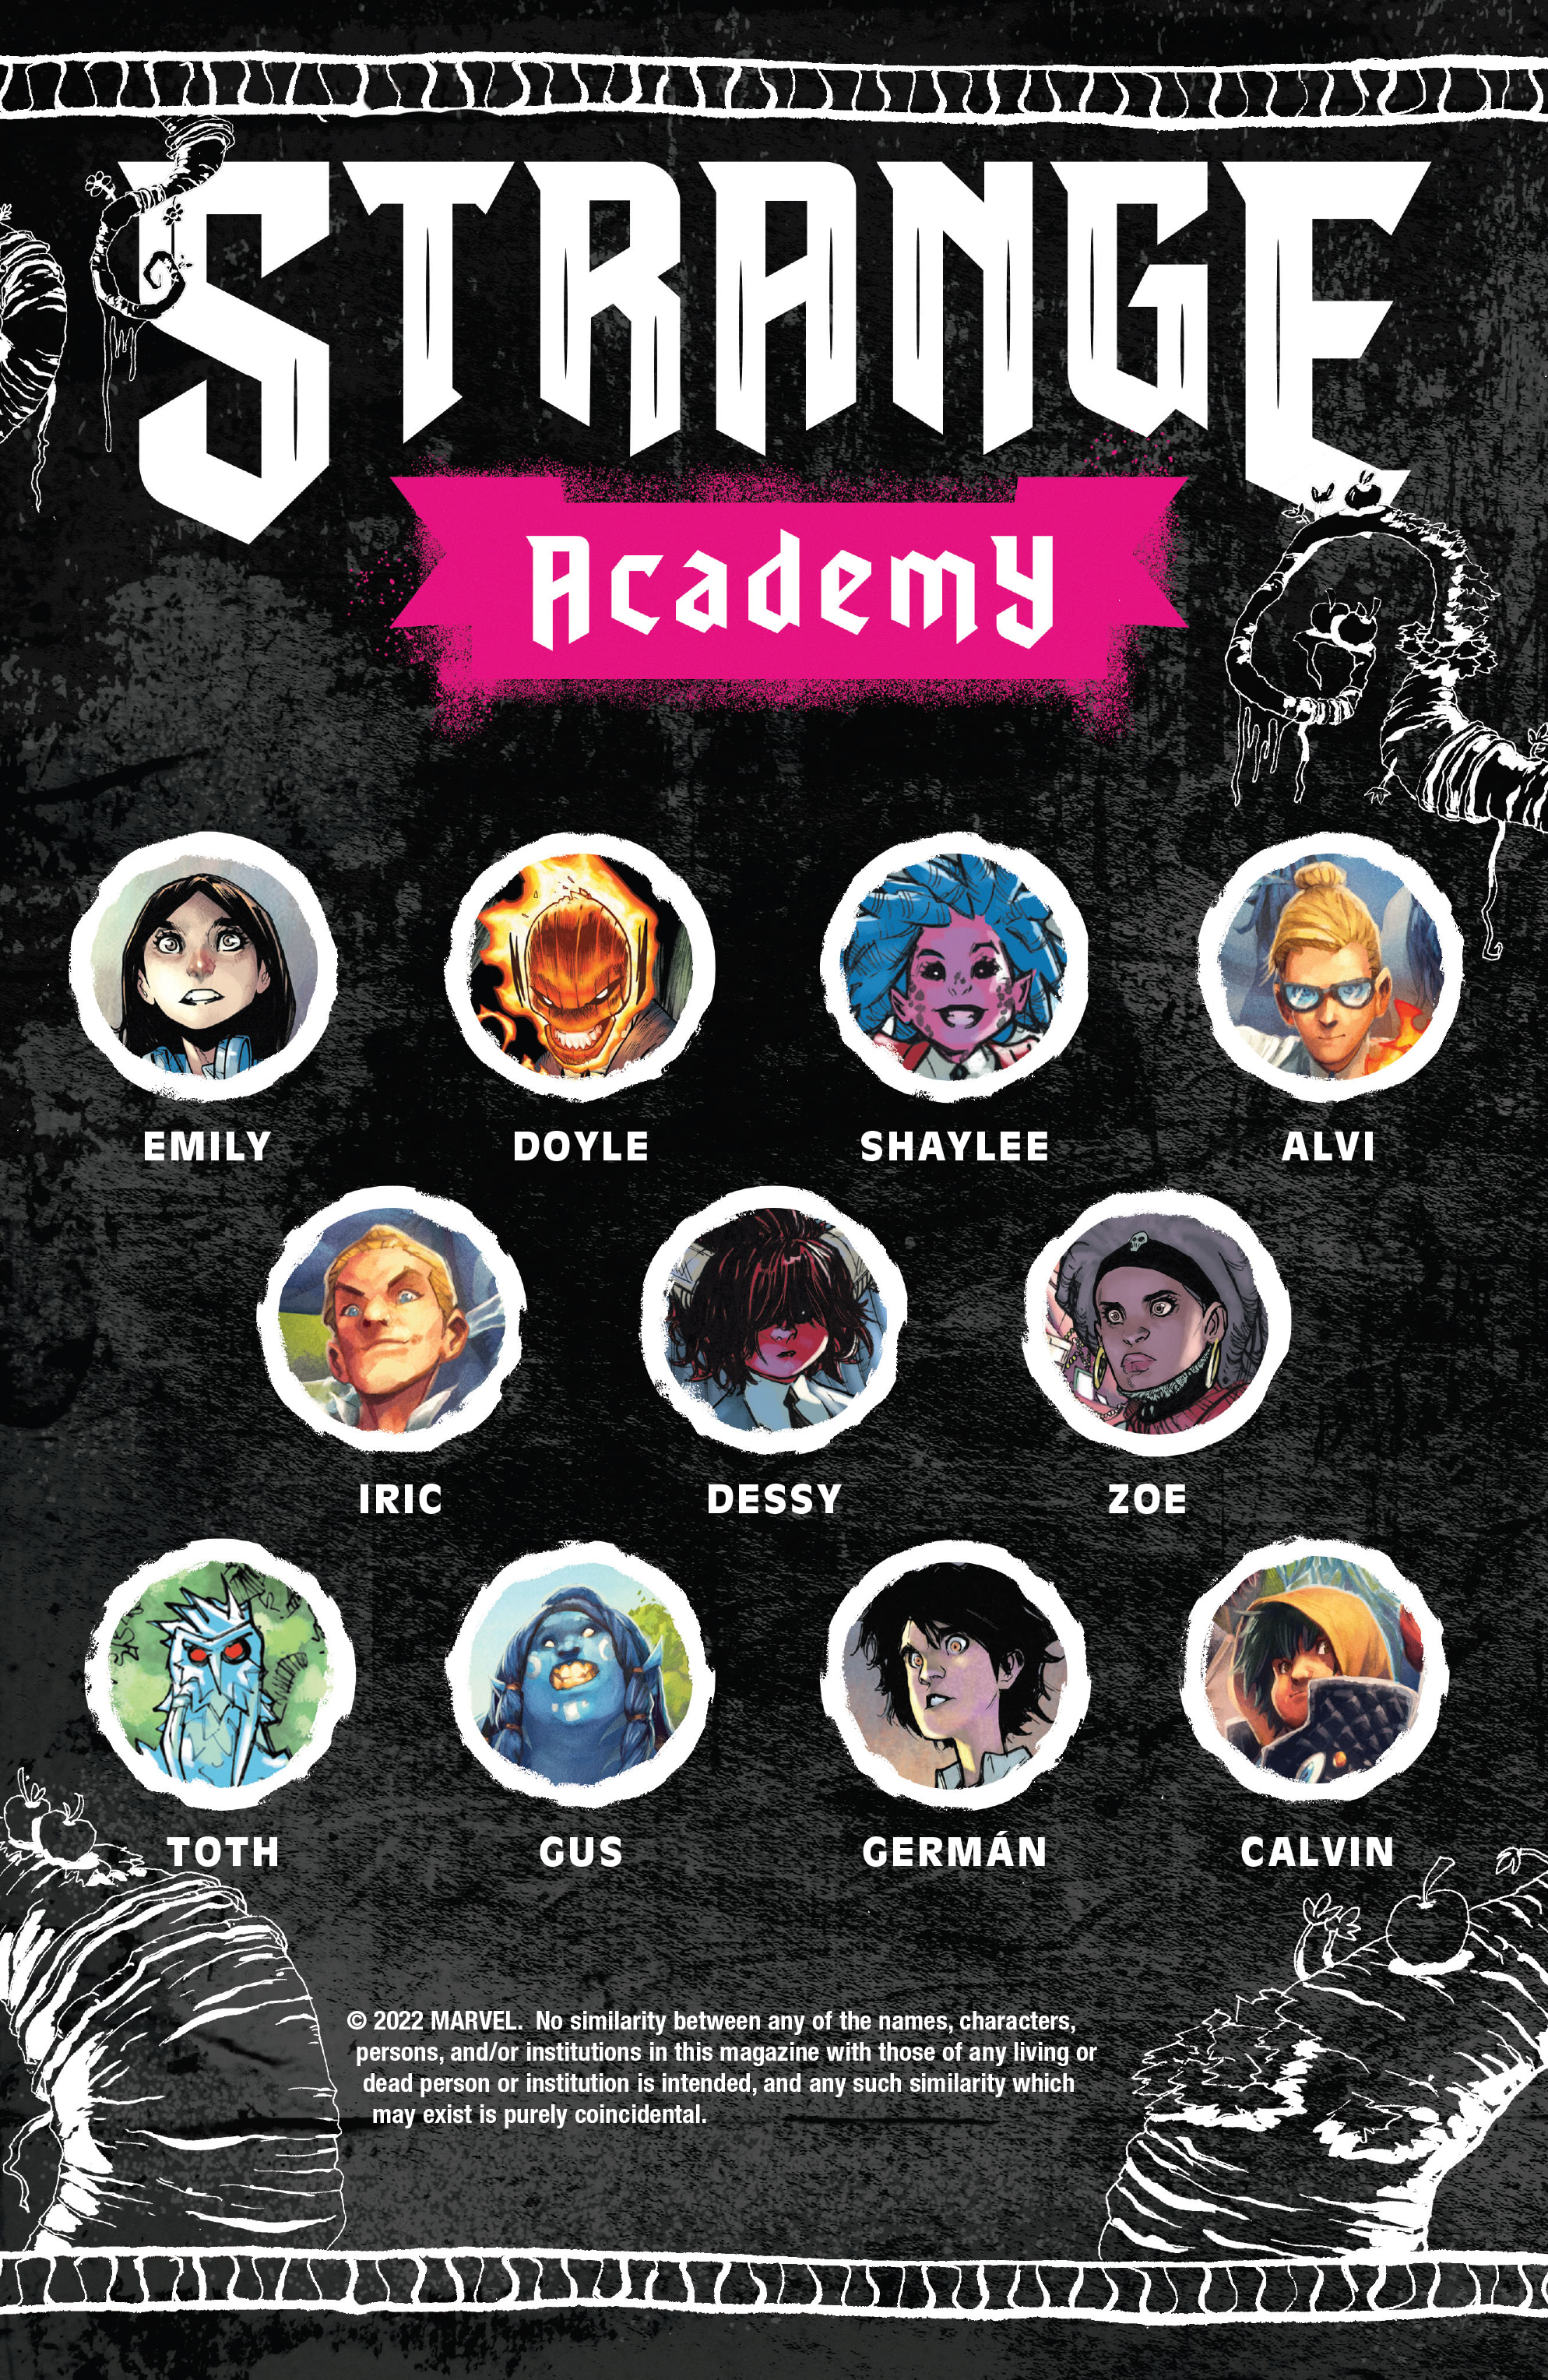 Read online Strange Academy comic -  Issue #18 - 3